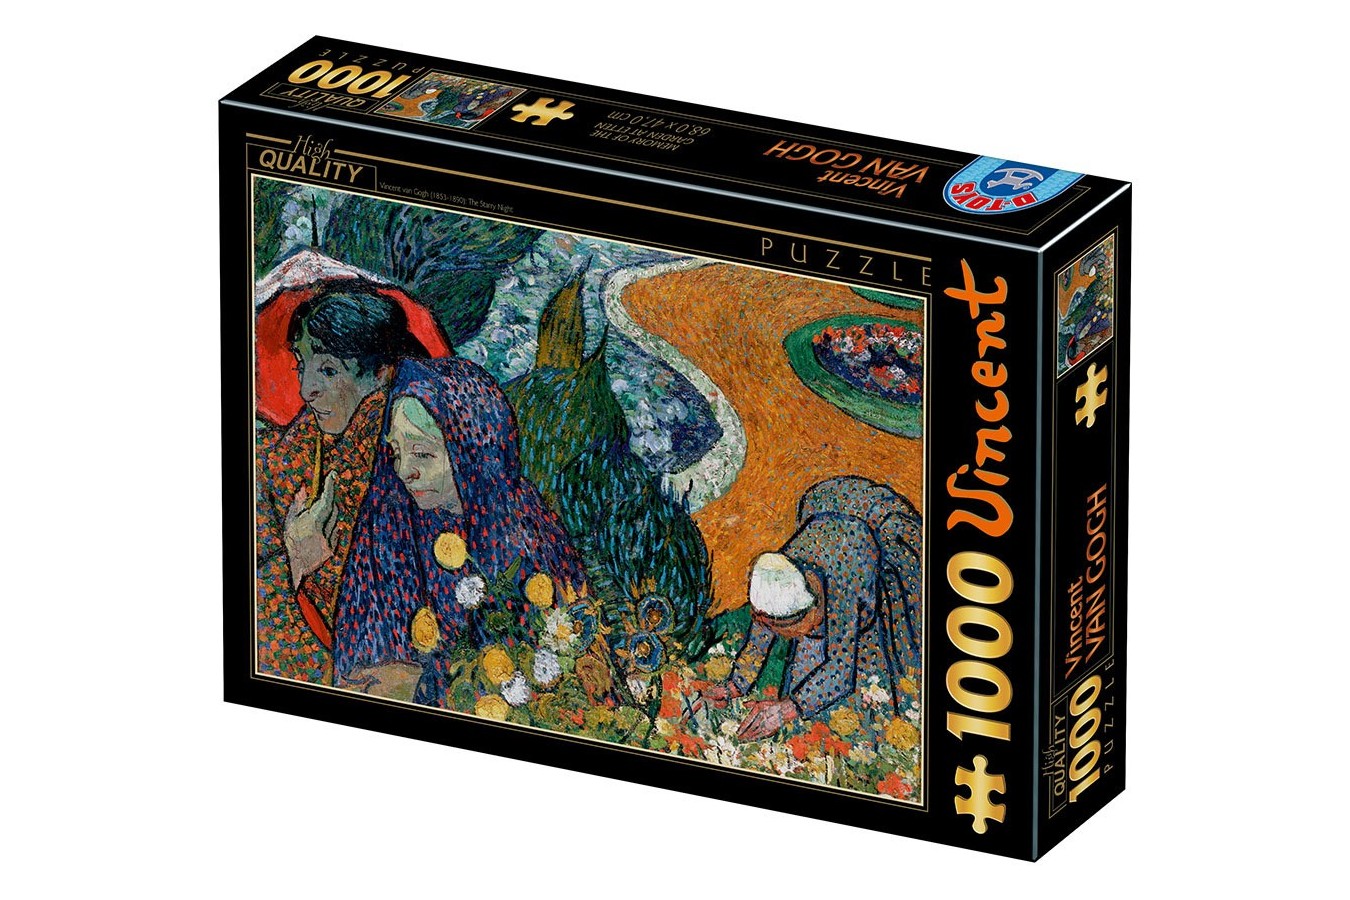 Puzzle 1000 piese D-Toys - Vincent Van Gogh: Memory of the Garden at Etten (Dtoys-77714)